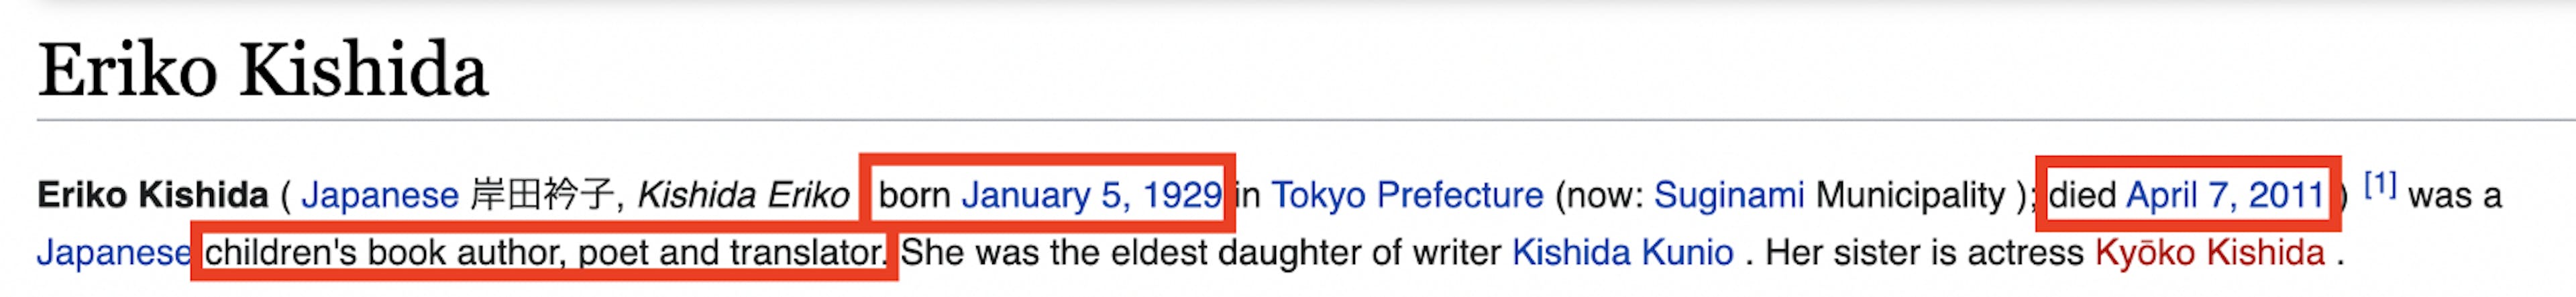 Figure 9. Wikipedia page on Eriko Kishida (translated page from German).